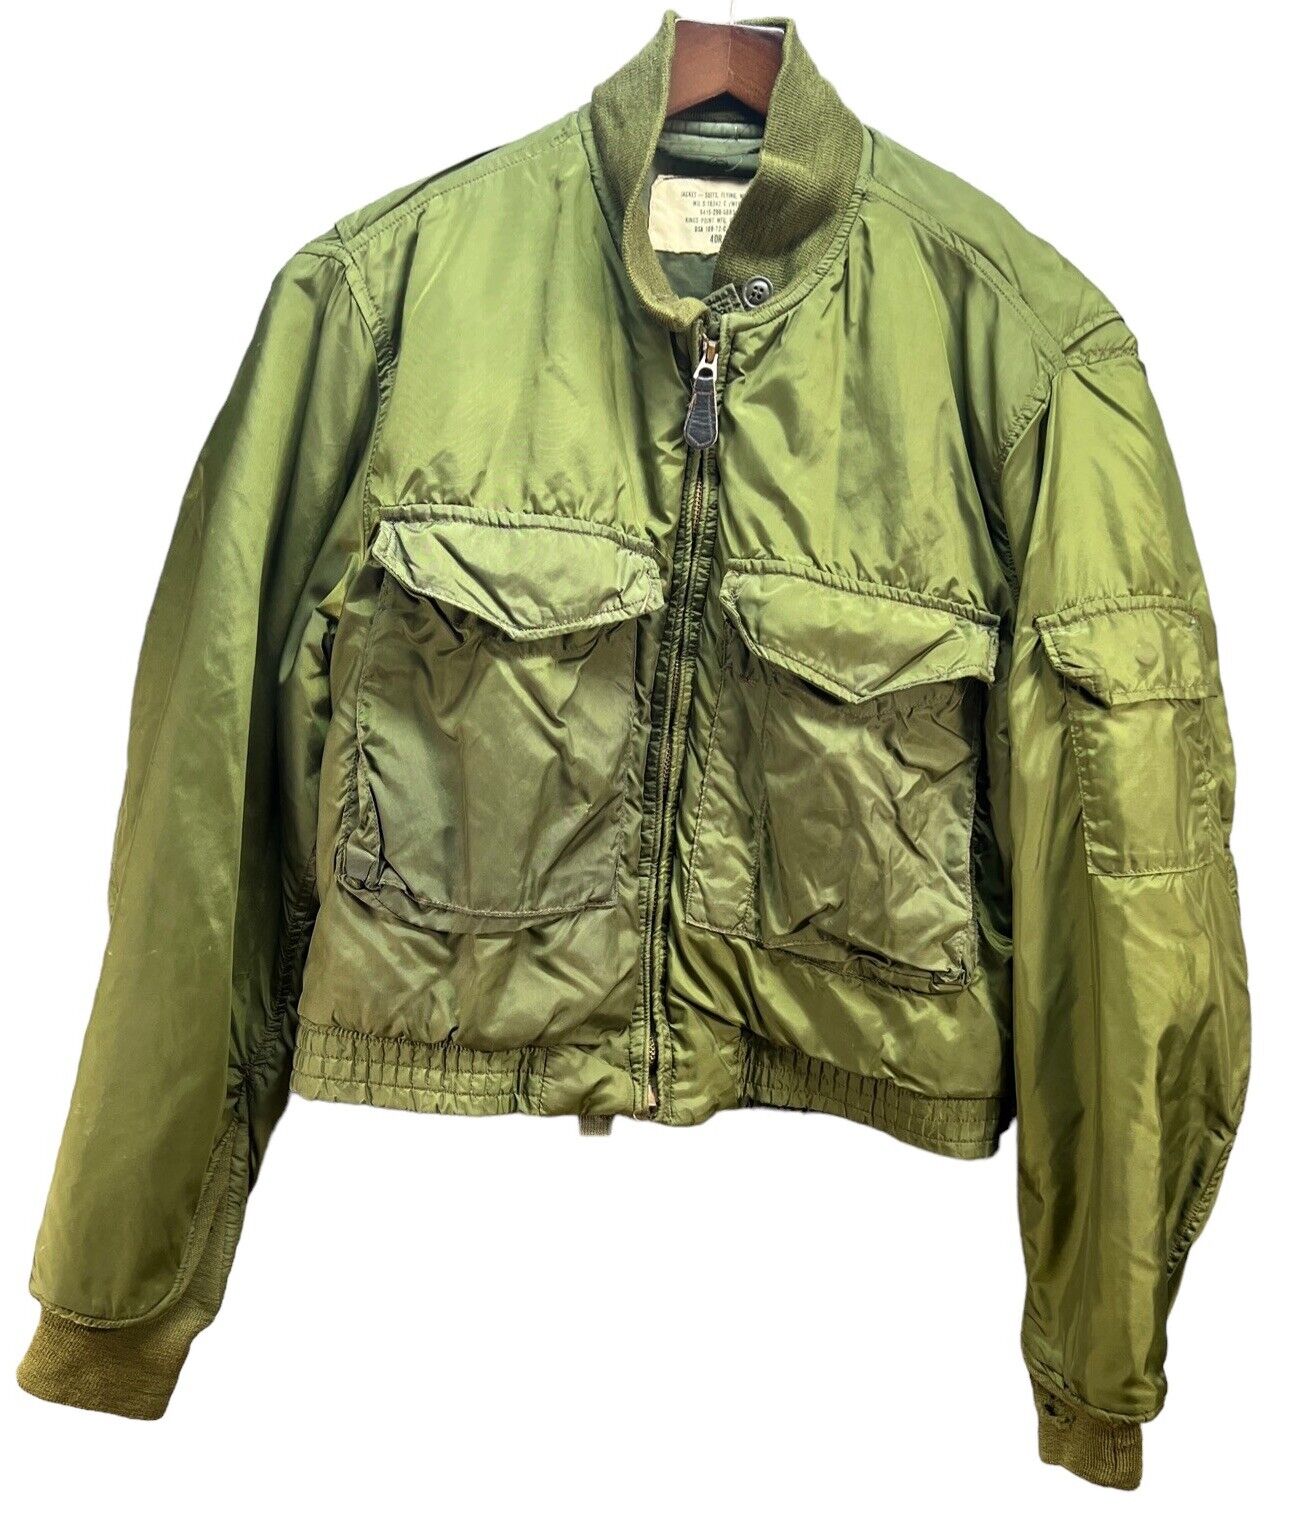 Vintage Vietnam War WEP Flying Flight Winter Suit Jacket. Size 40R L 1970